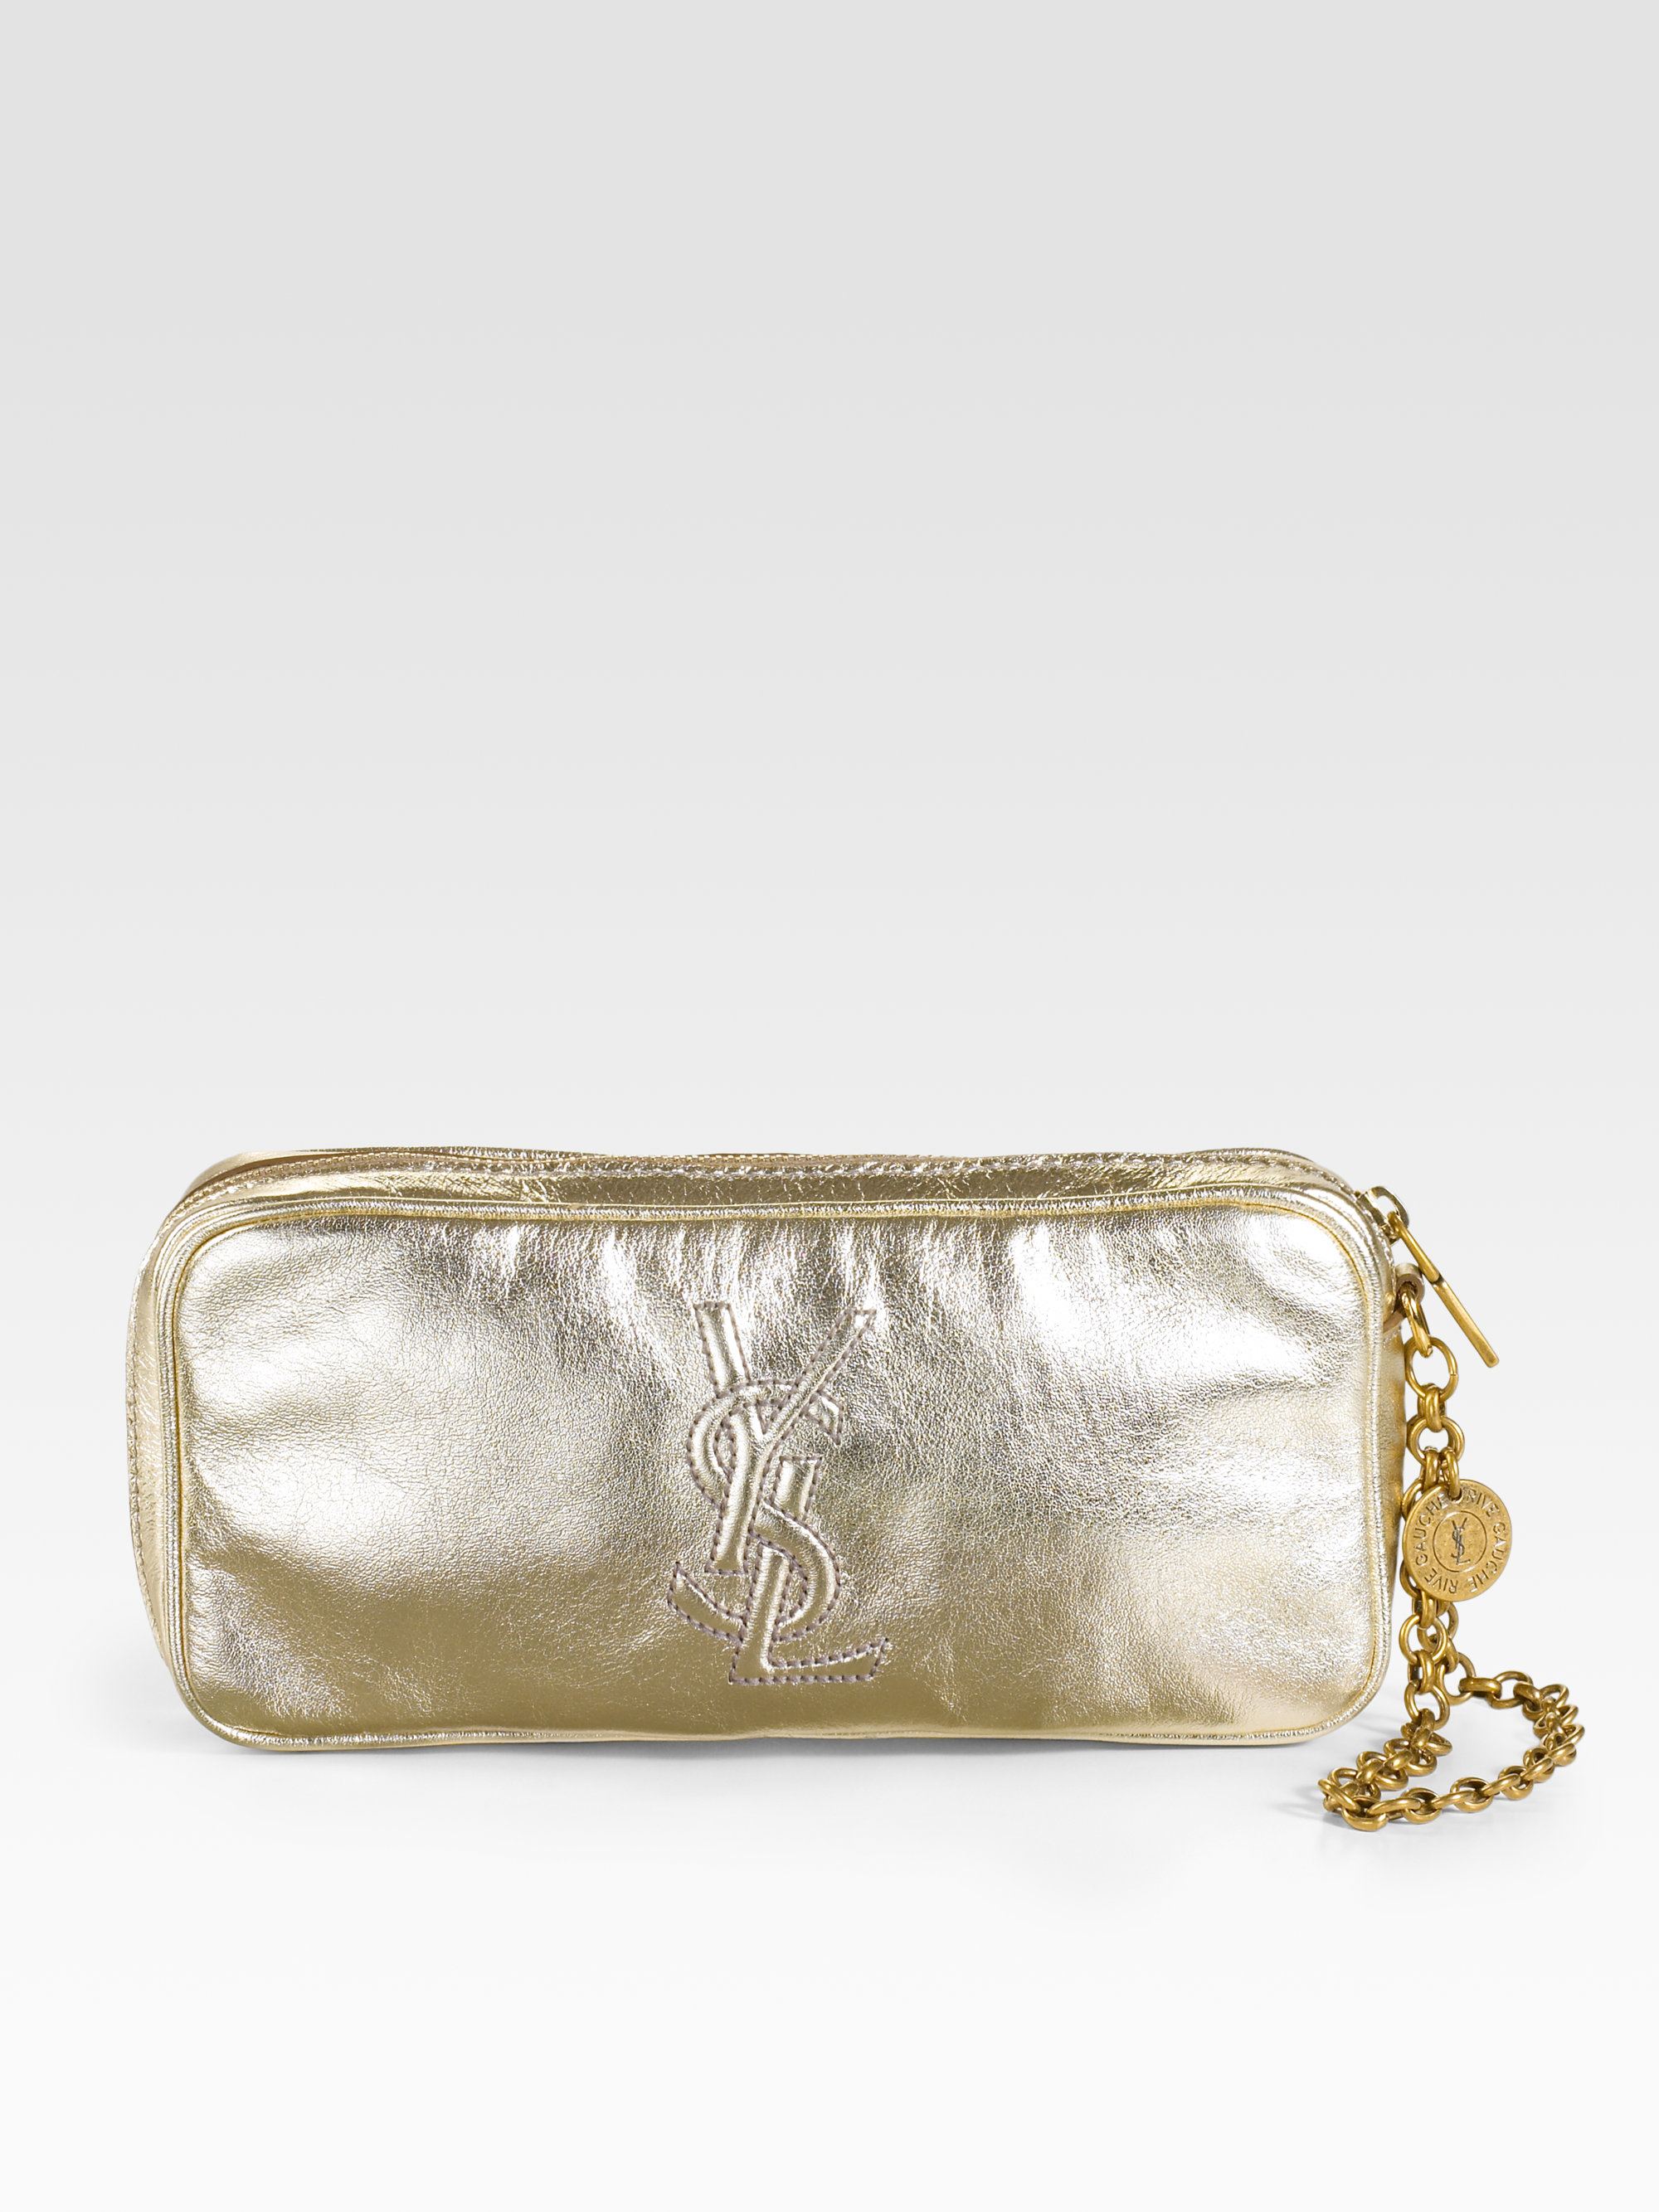 ysl wallet online - Saint laurent Belle Du Jour Eastwest Metallic Wristlet in Gold | Lyst